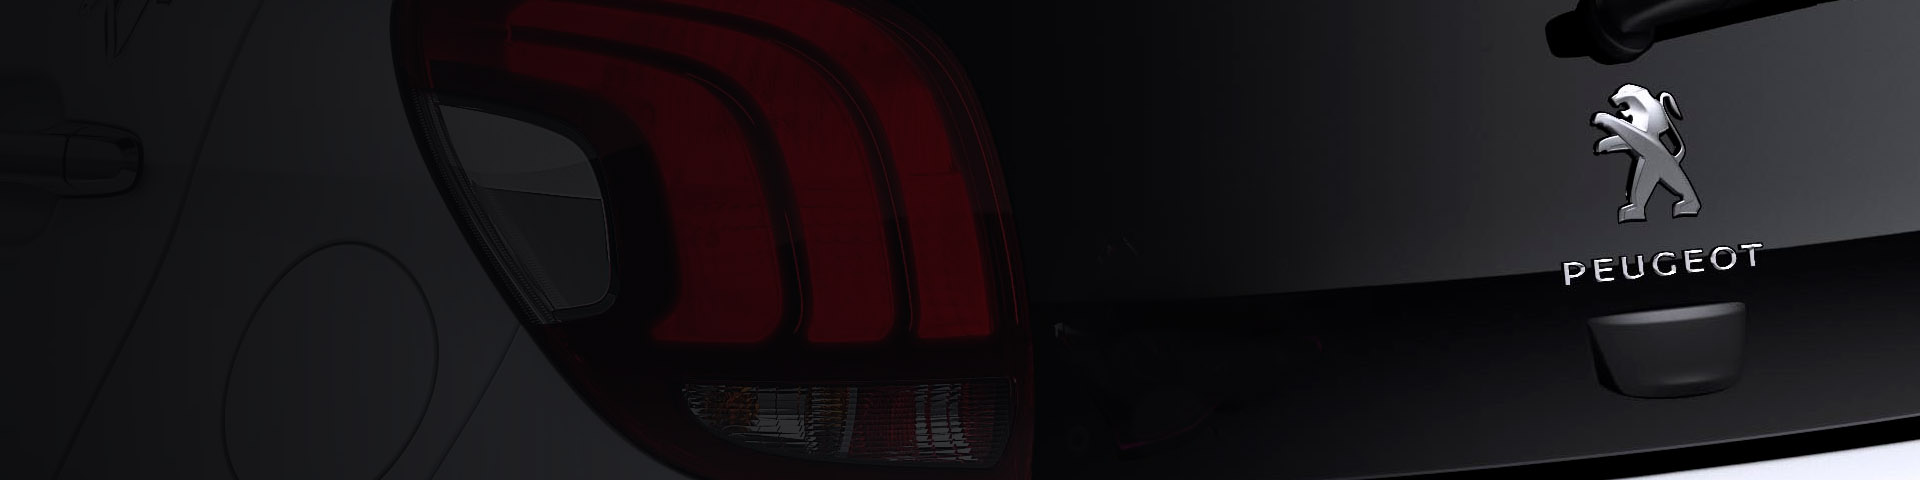 Peugeot 308 Backdrop